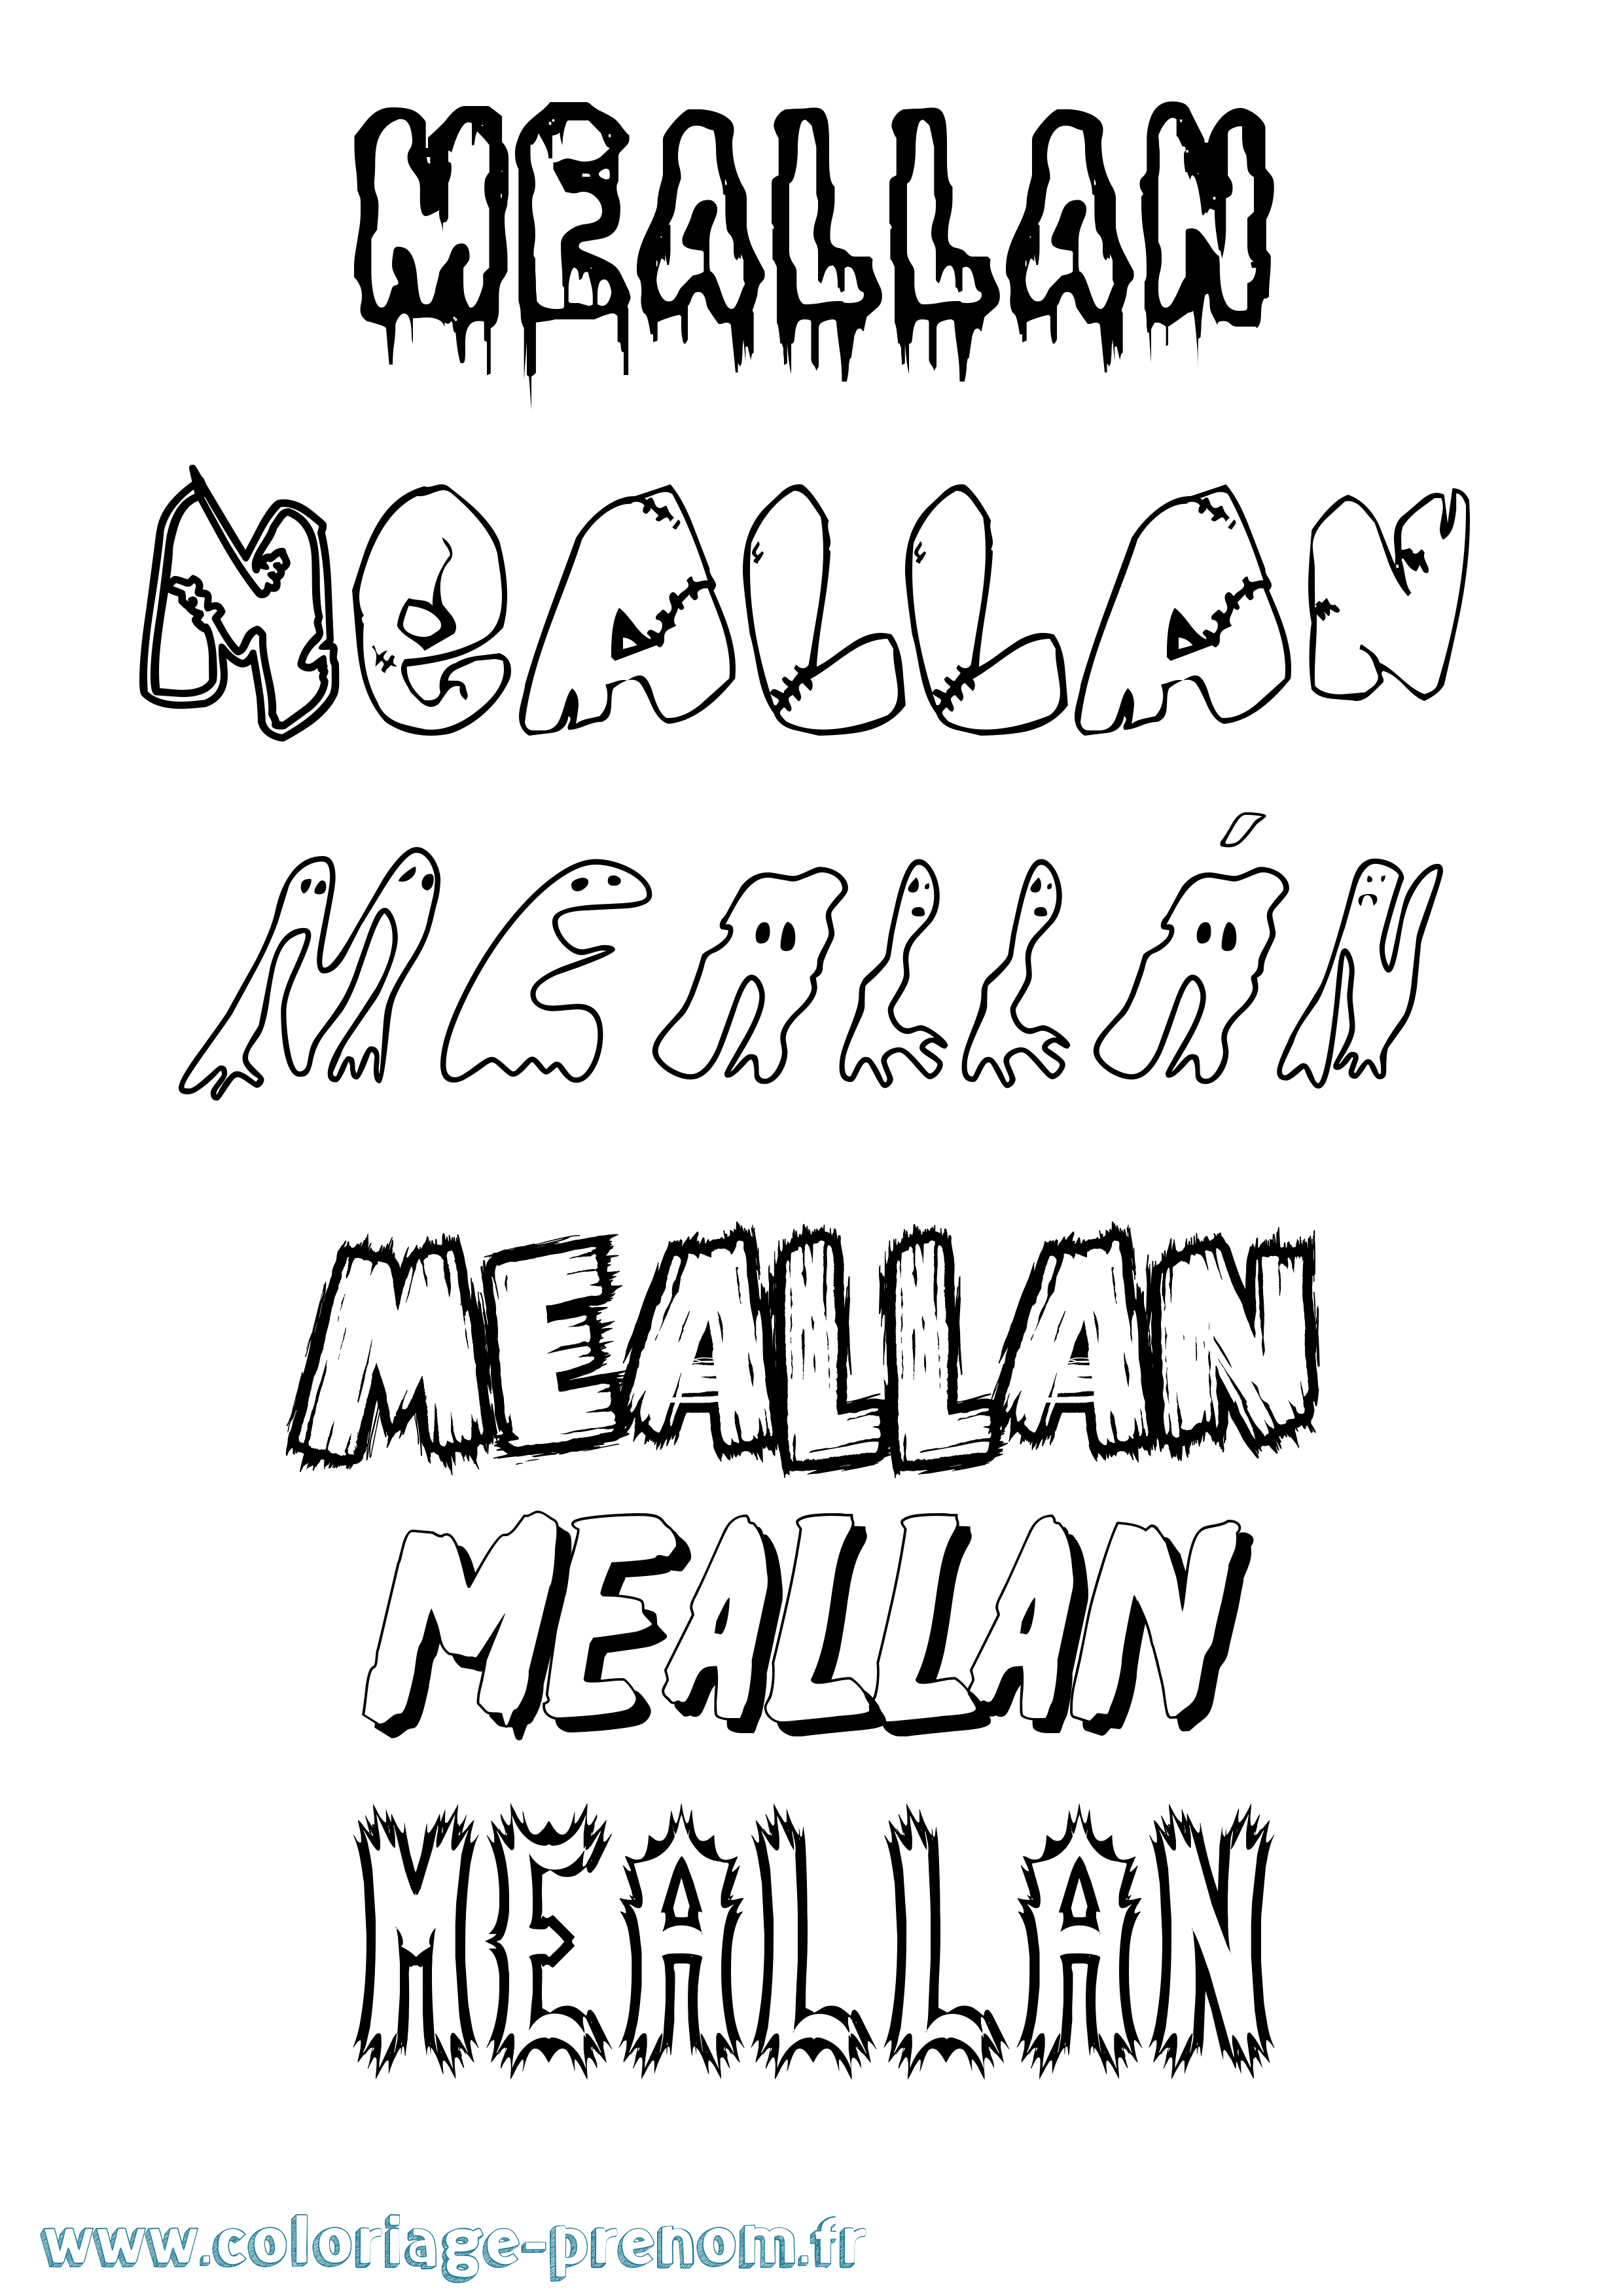 Coloriage prénom Meallán Frisson